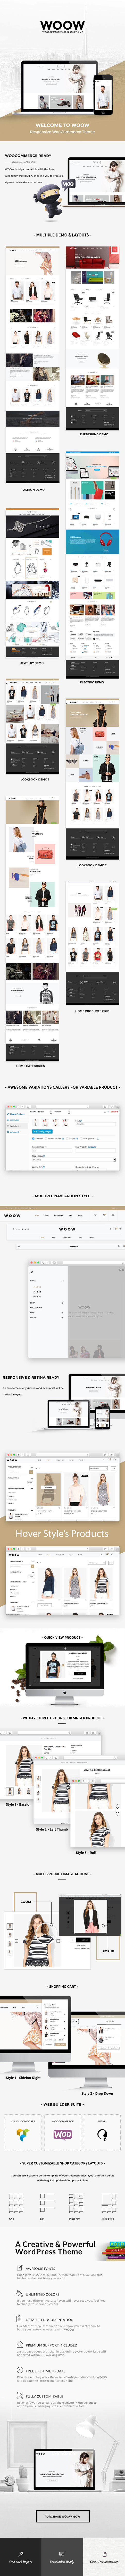 WOOW - Fashion WooCommerce WordPress theme